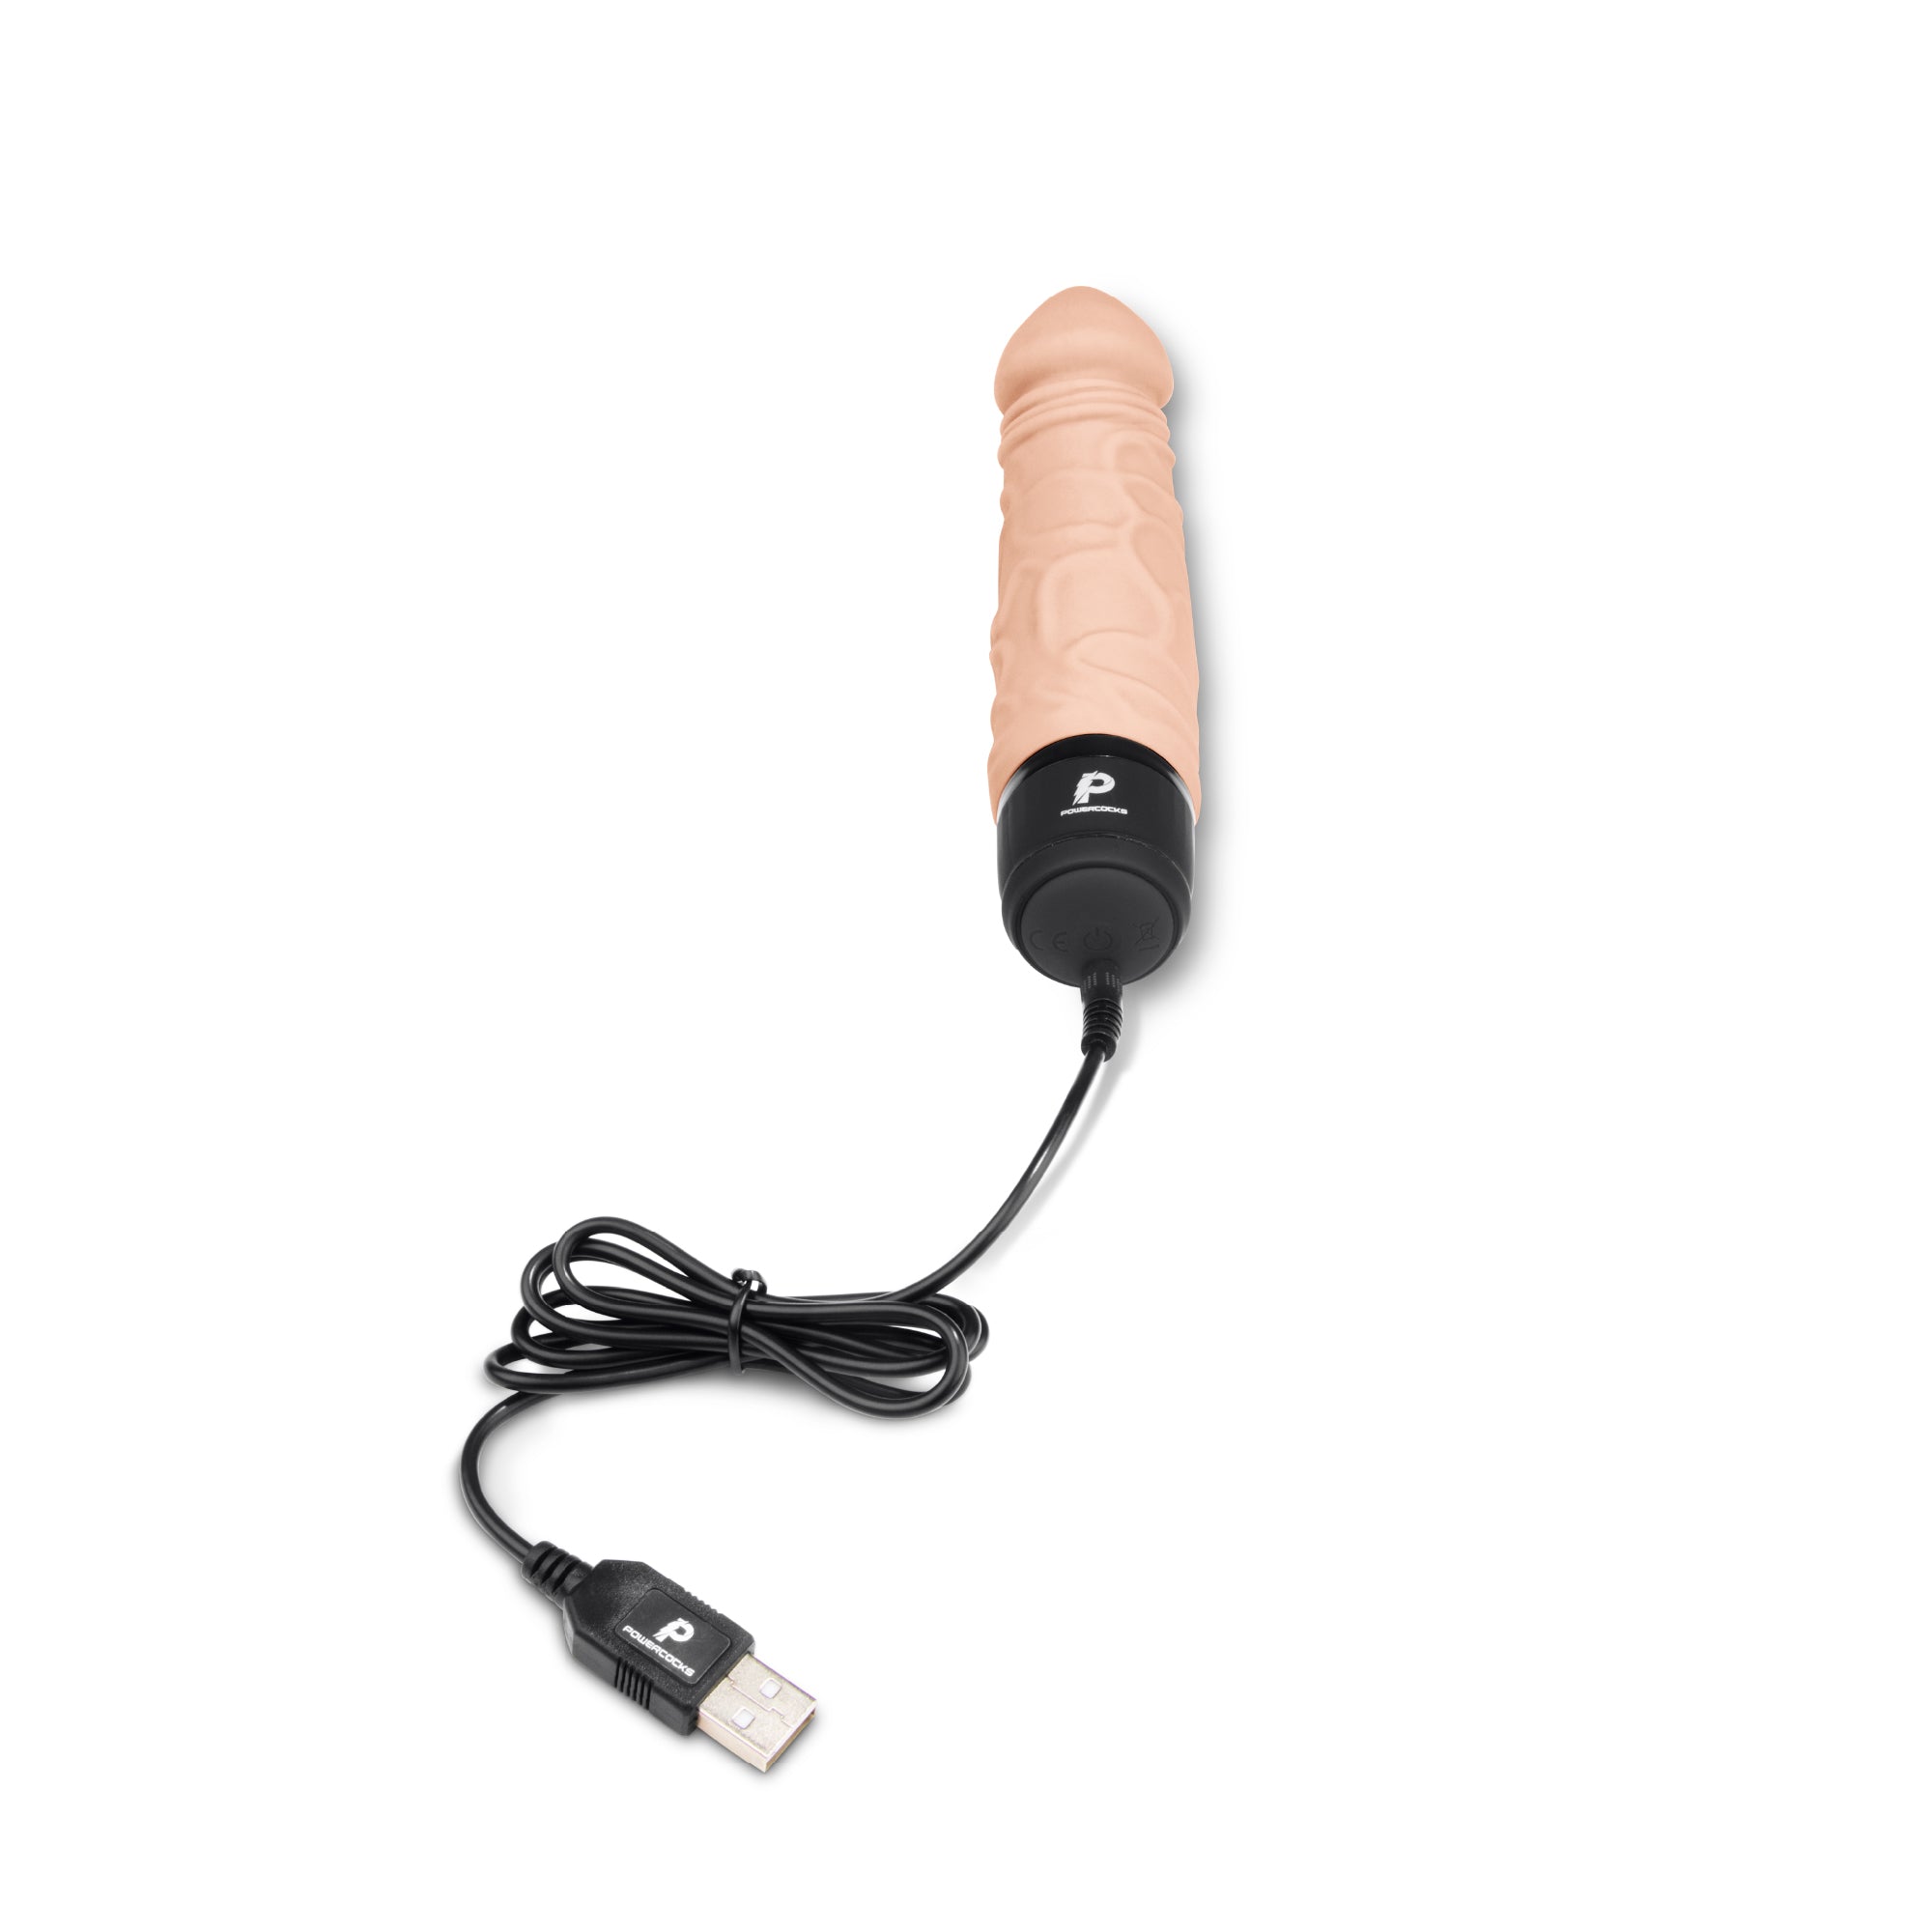 POWERCOCKS 6.5 Inches Realistic Vibrator Nude